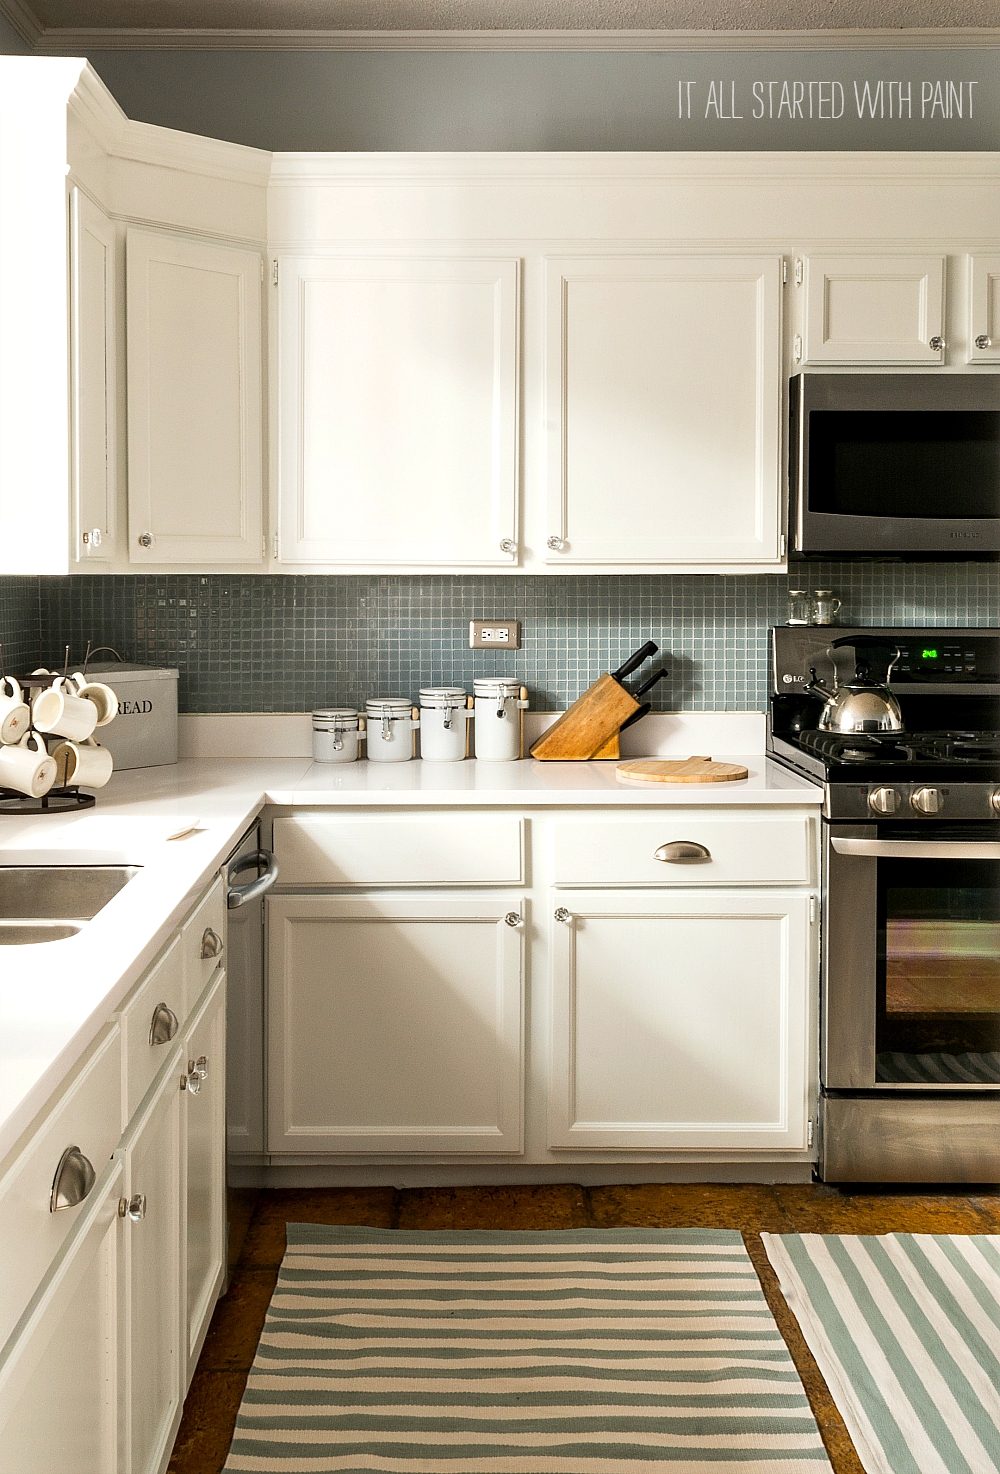 http://www.itallstartedwithpaint.com/wp-content/uploads/2015/08/white-kitchen-cabinets-white-counter-tops-blue-gray-backsplash-12-of-21-2.jpg